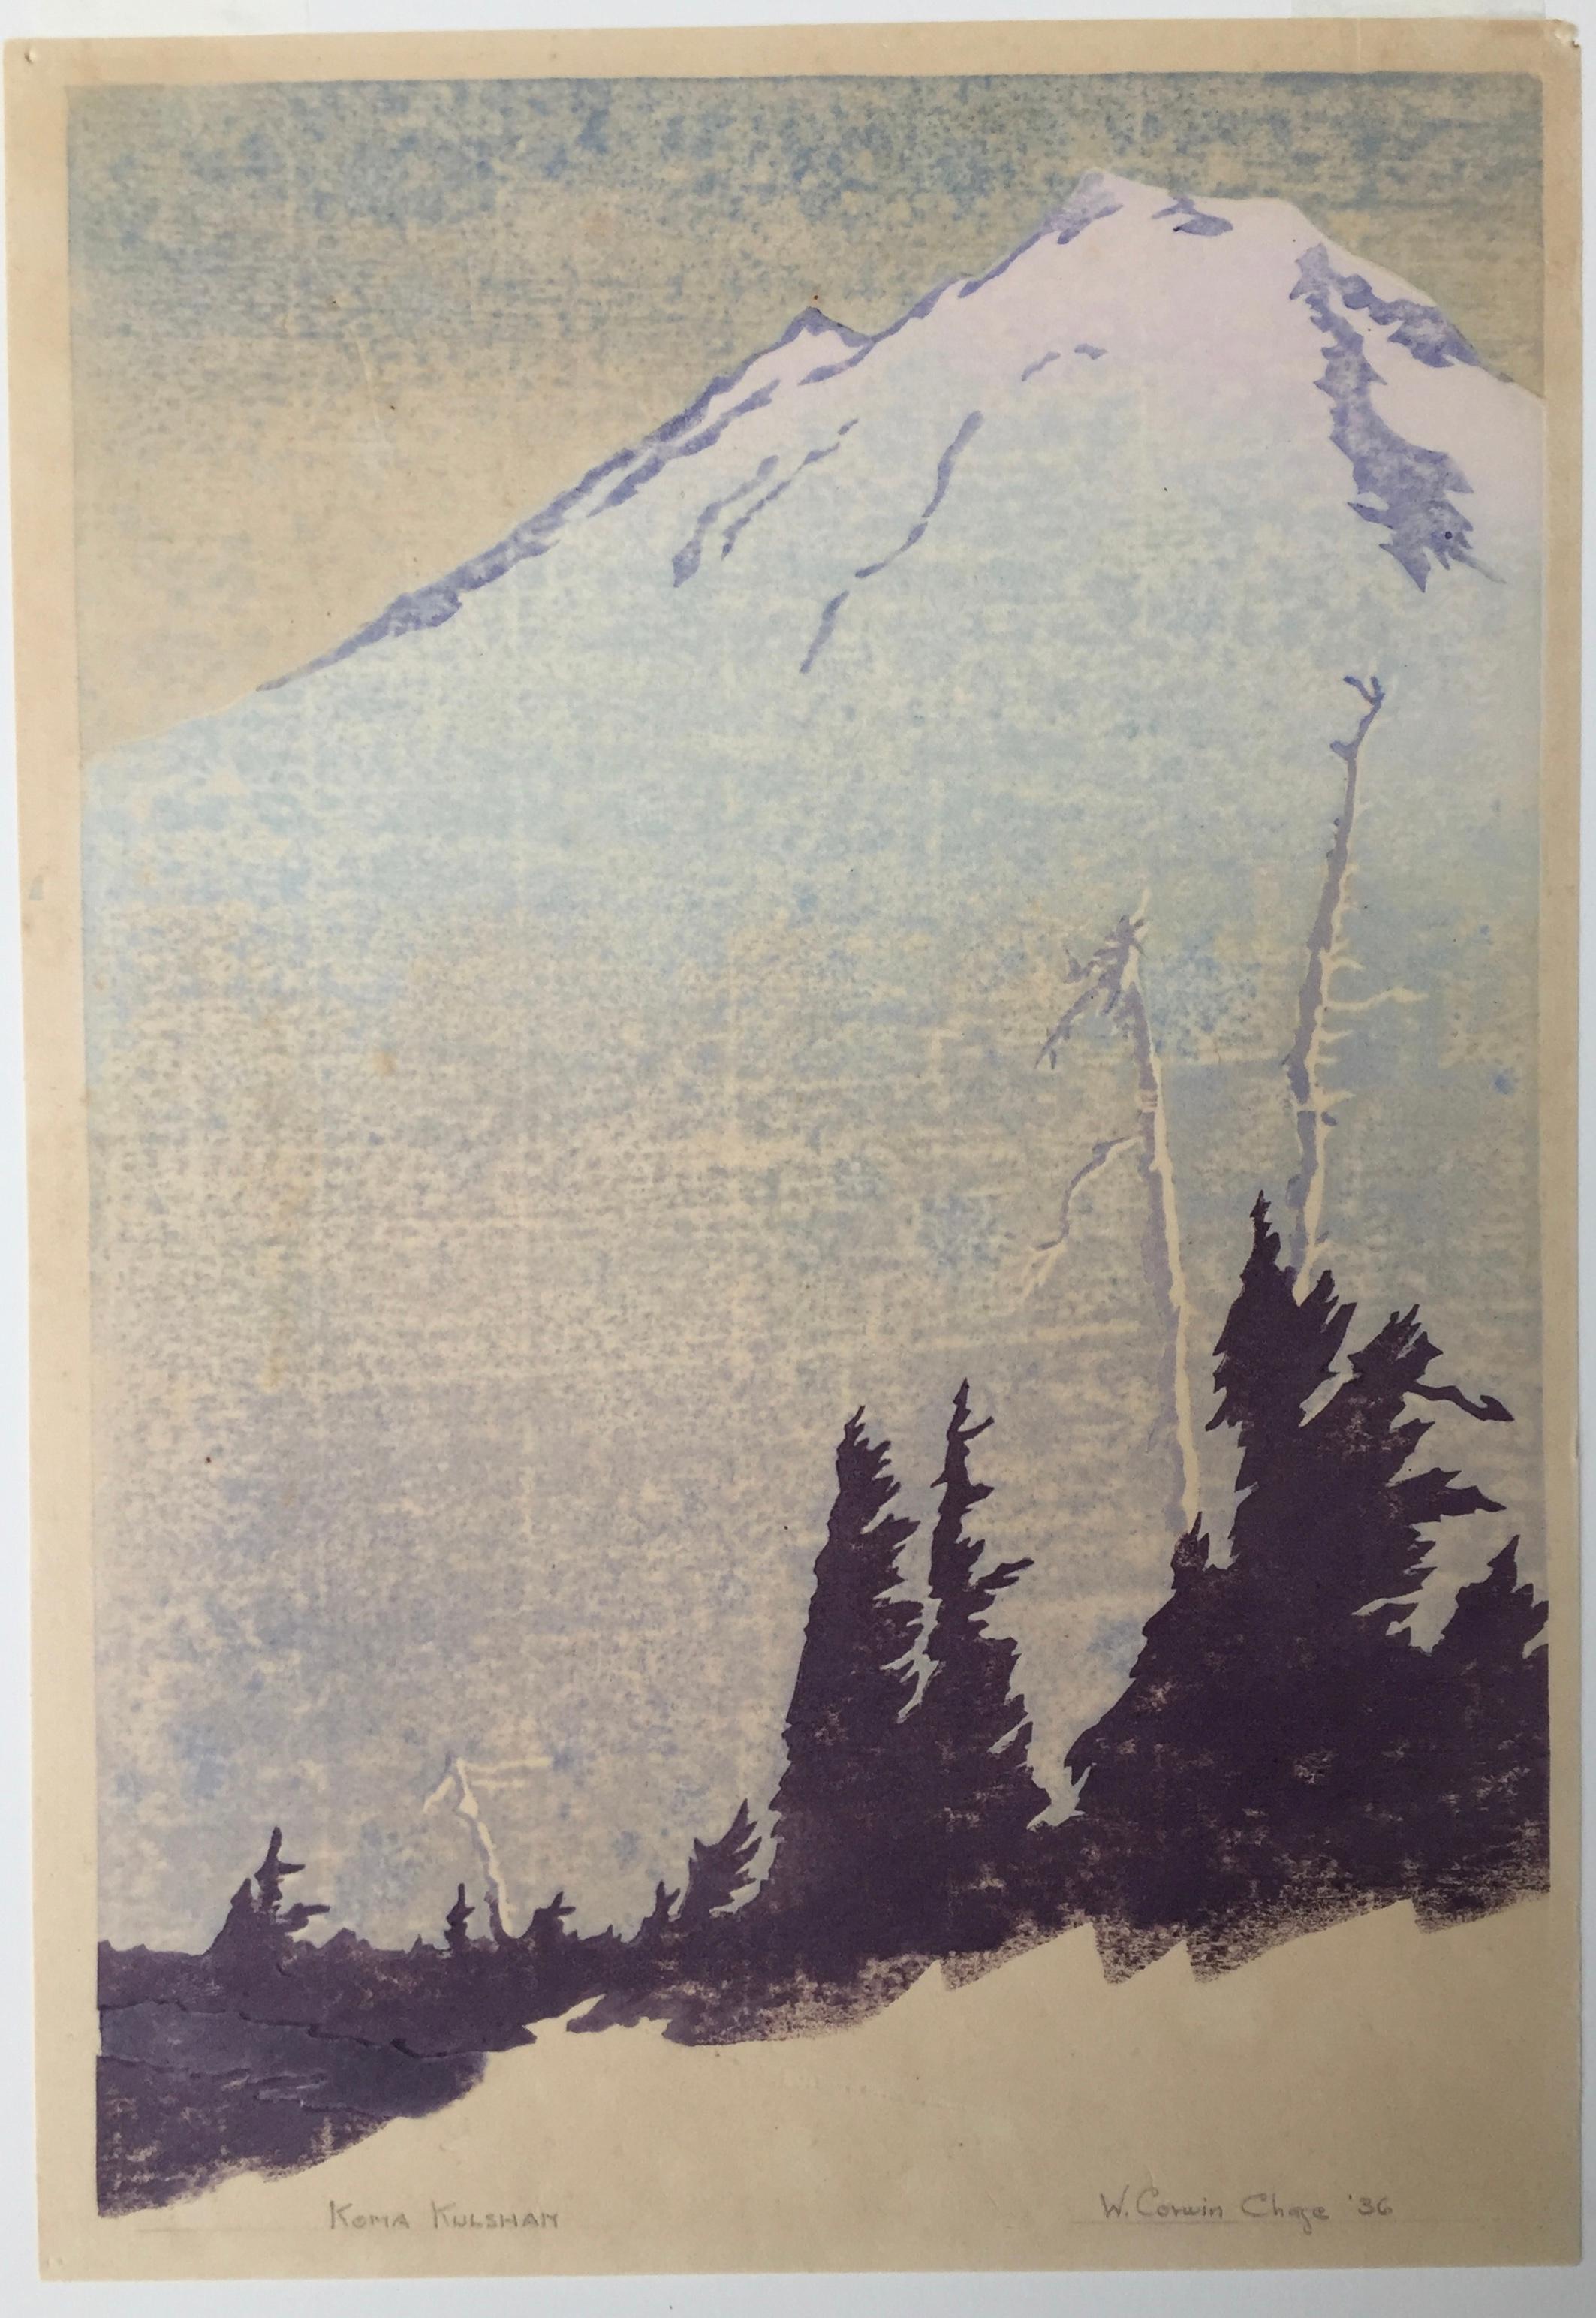 Mount Baker / Koma Kulsham, Washington State - Print by Wendell Corwin Chase